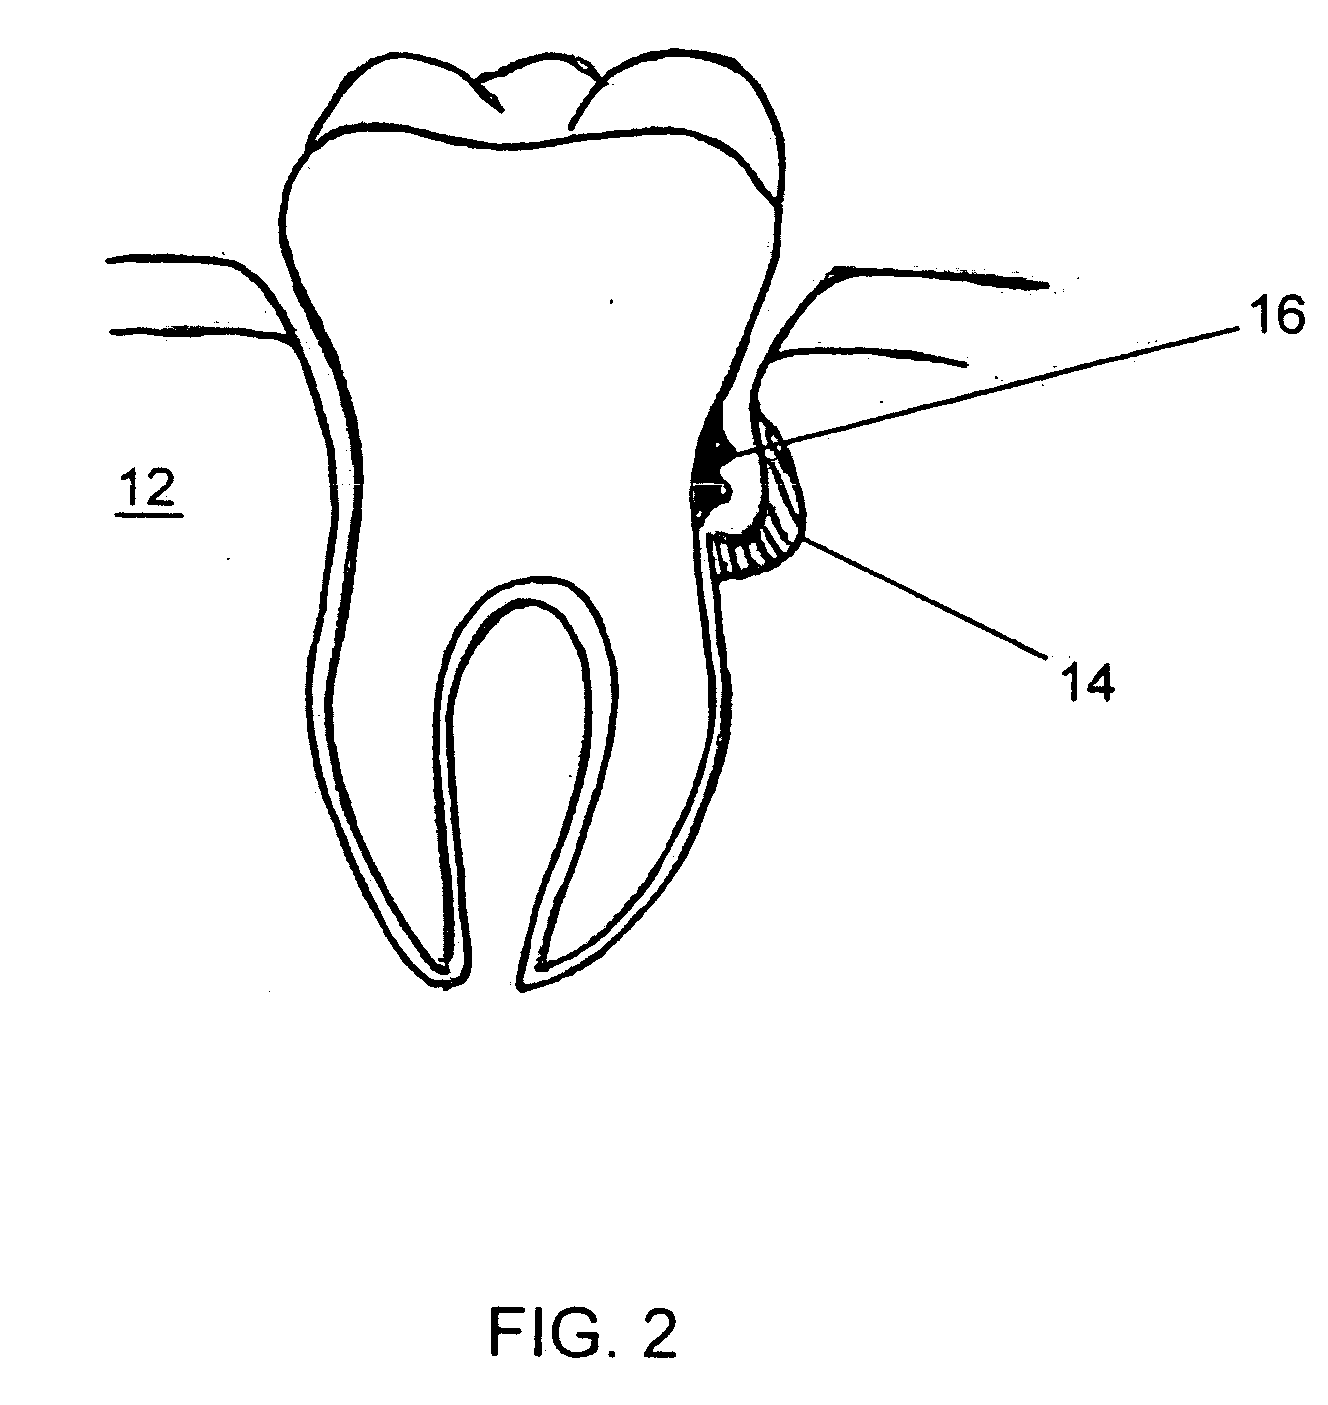 Non-invasive method for treating periodontal disease